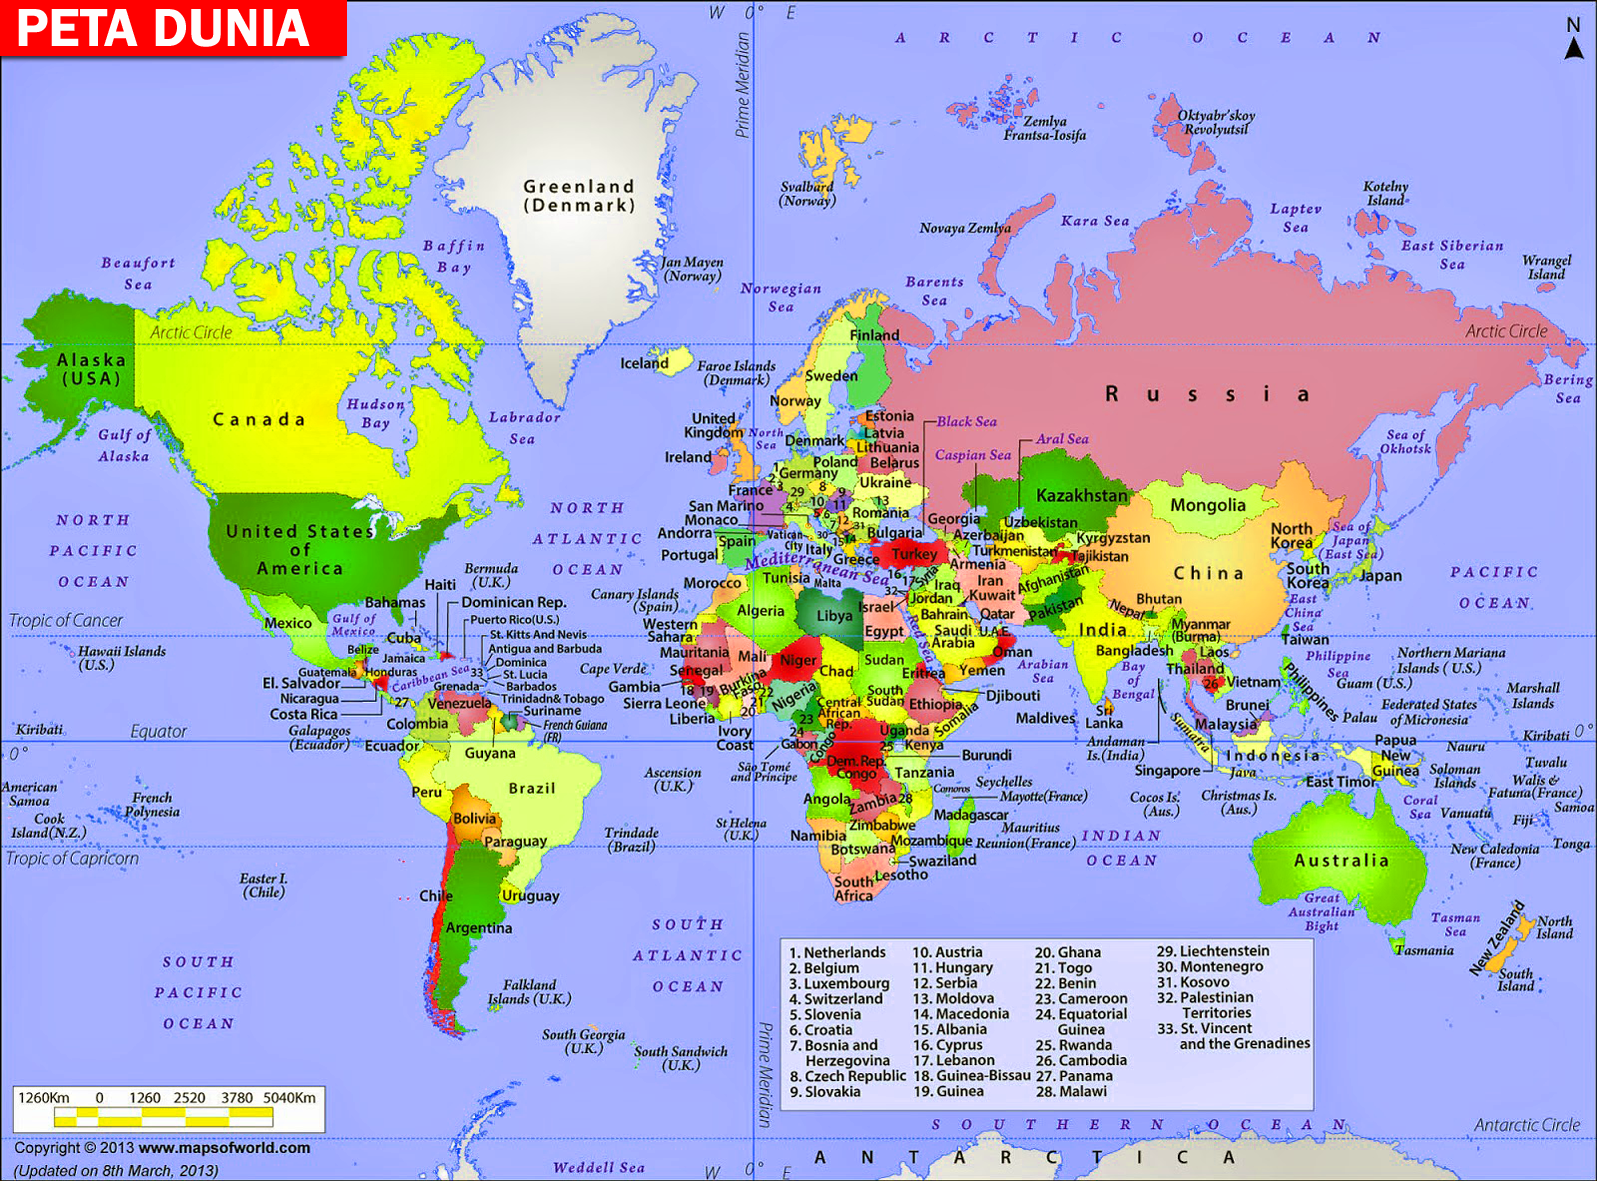 SEJARAH POPULER: Peta dunia berwarna dan hitam putih lengkap